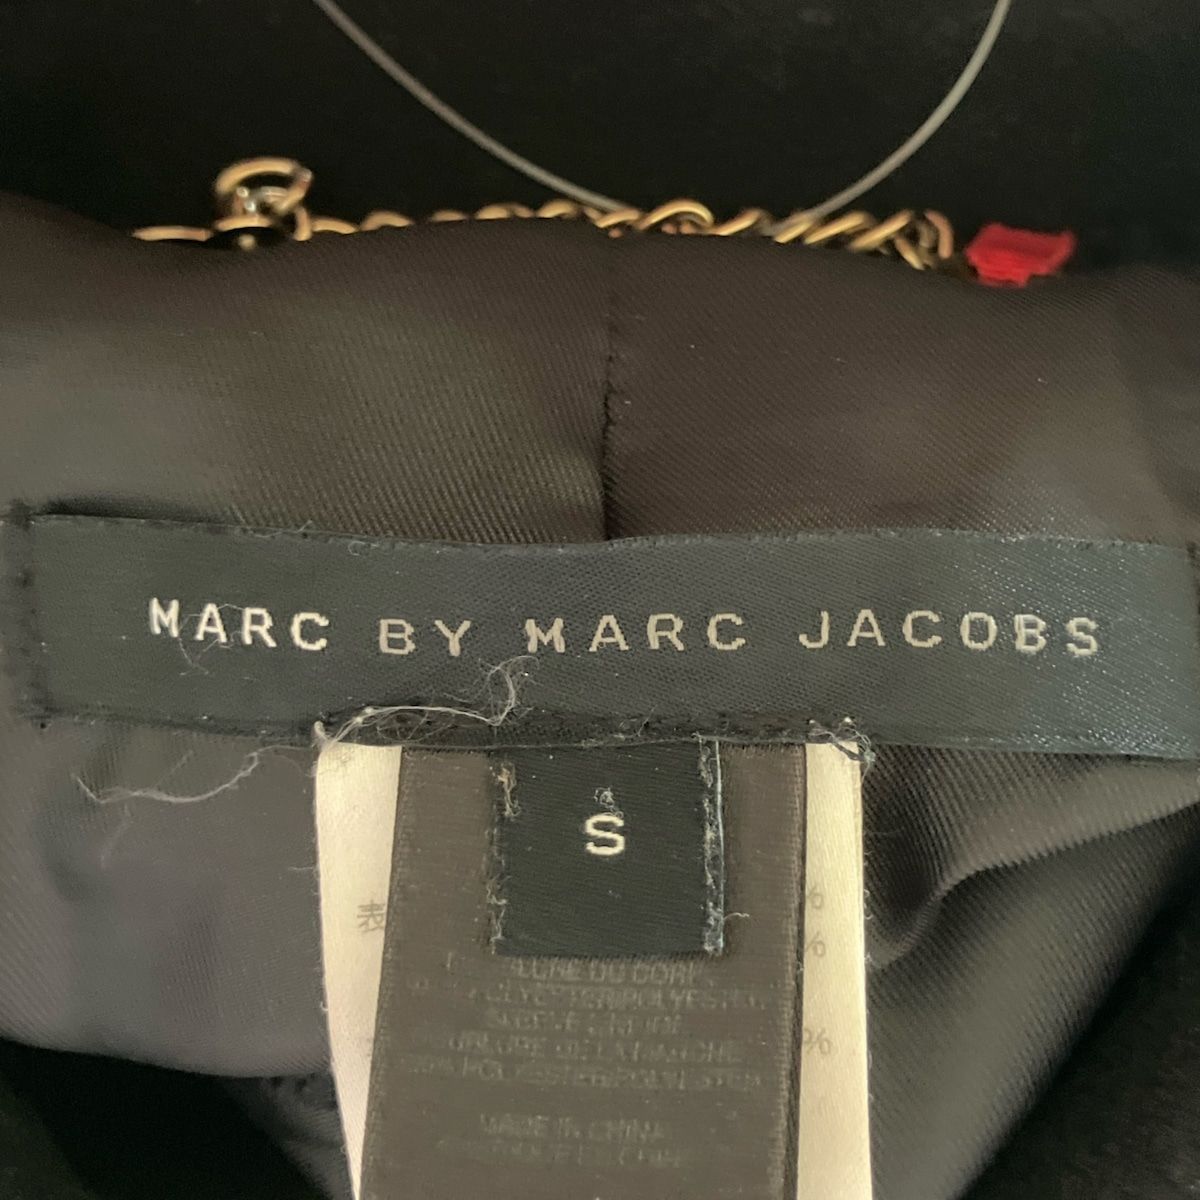 MARC BY MARC JACOBS(マークバイマークジェイコブス) コート サイズS レディース - 黒 長袖/秋/冬